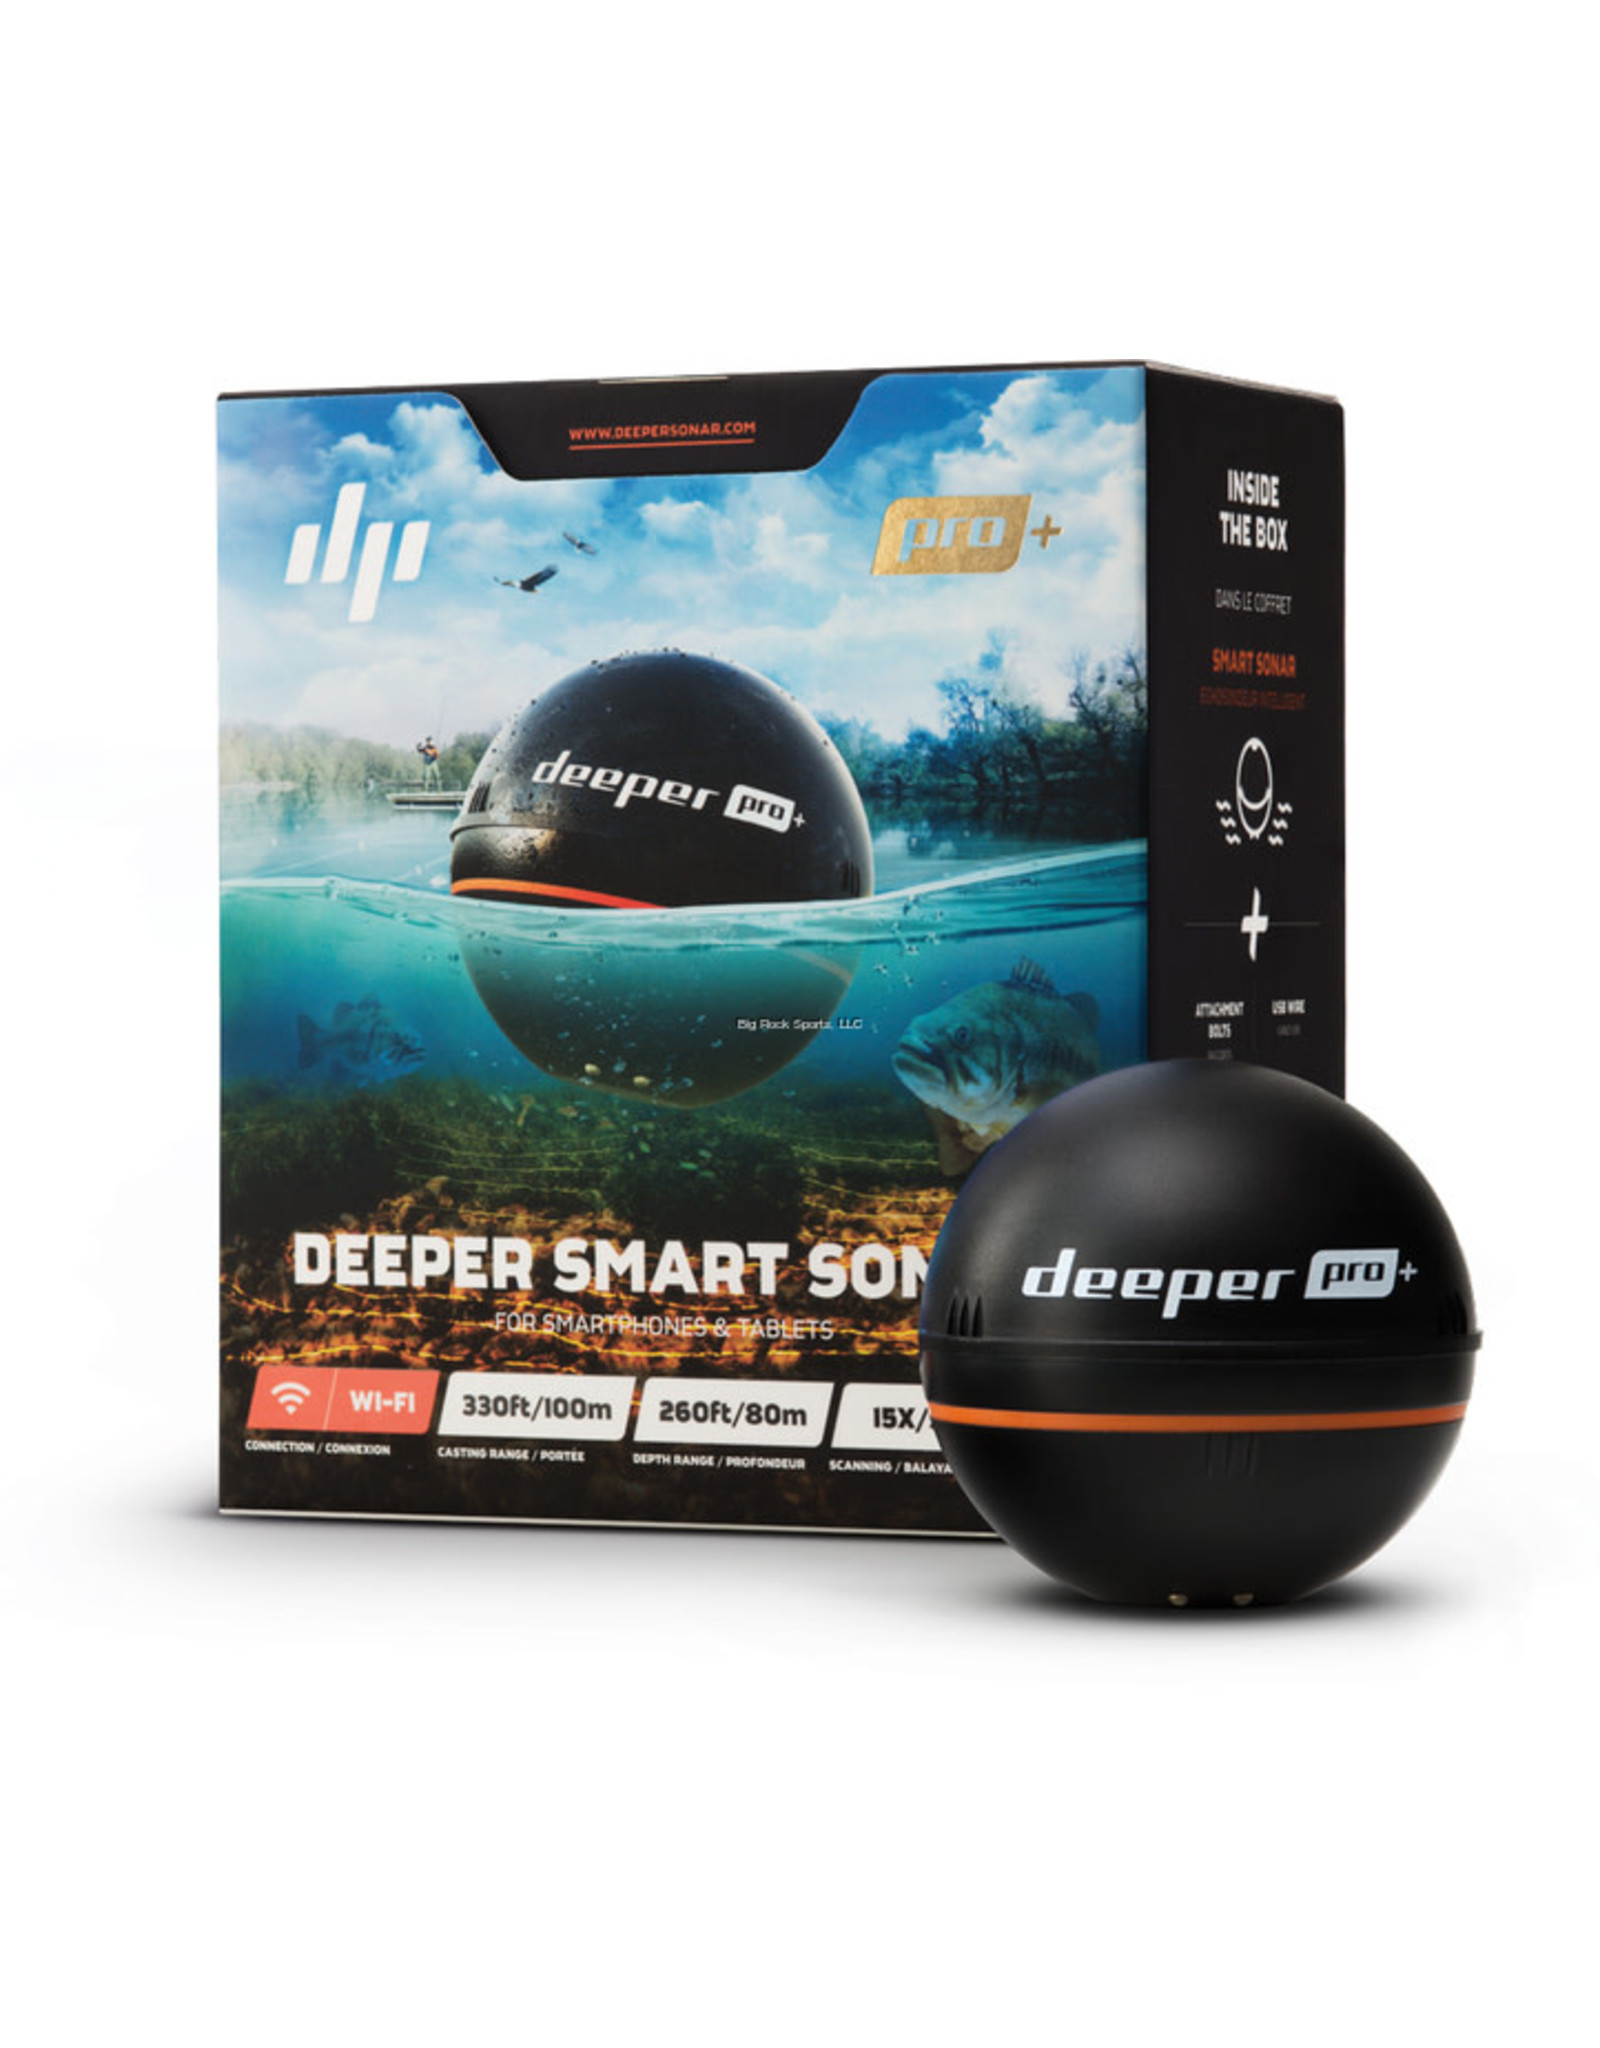 Deeper Deeper ITGAM0303 Smart FishFinder PRO+